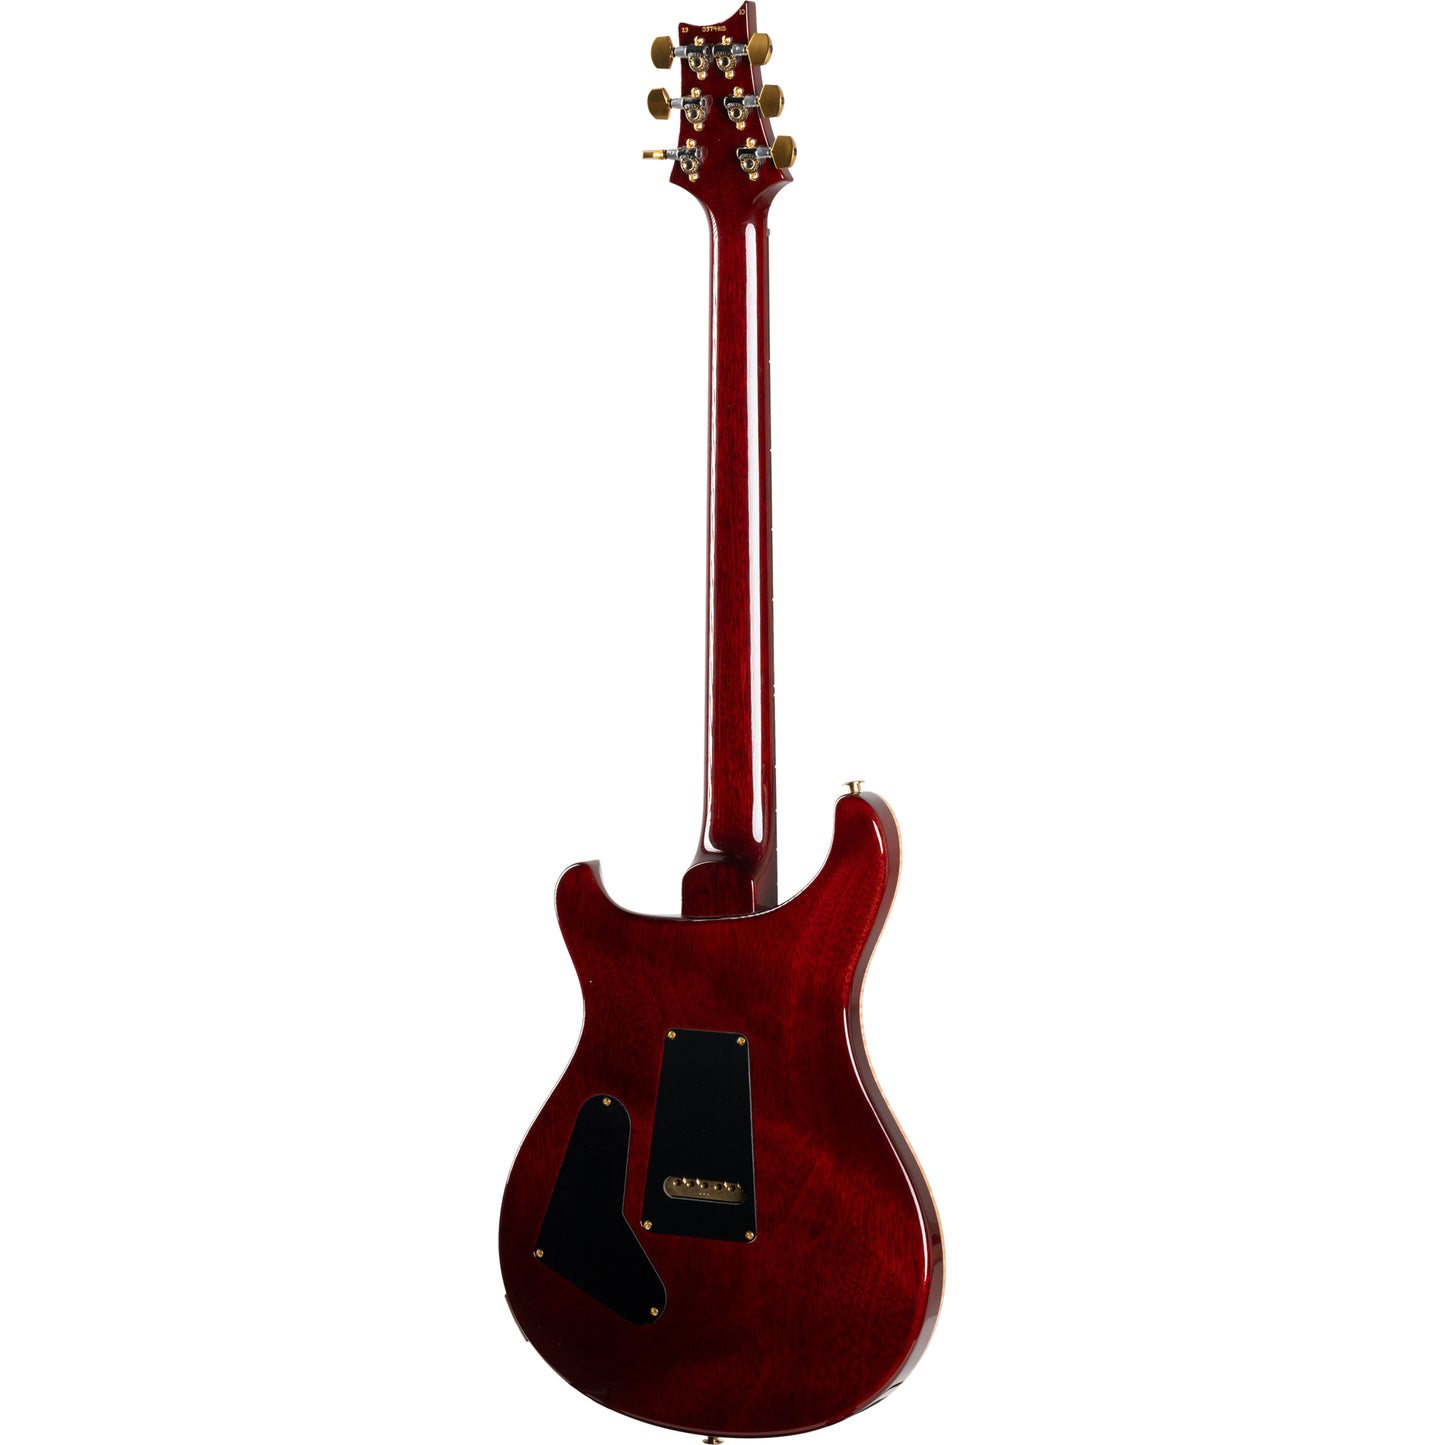 PRS Custom 24 Electric Guitar - Fire Red 10-Top